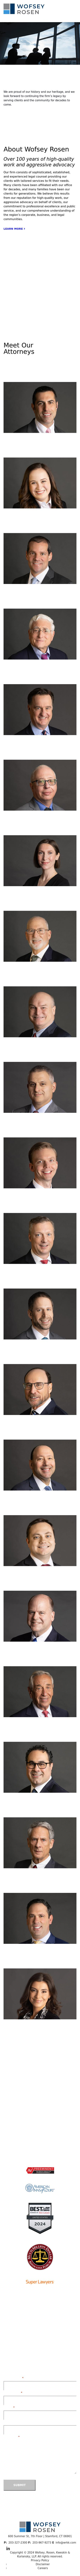 Wofsey Rosen Kweskin & Kuri - Stamford CT Lawyers